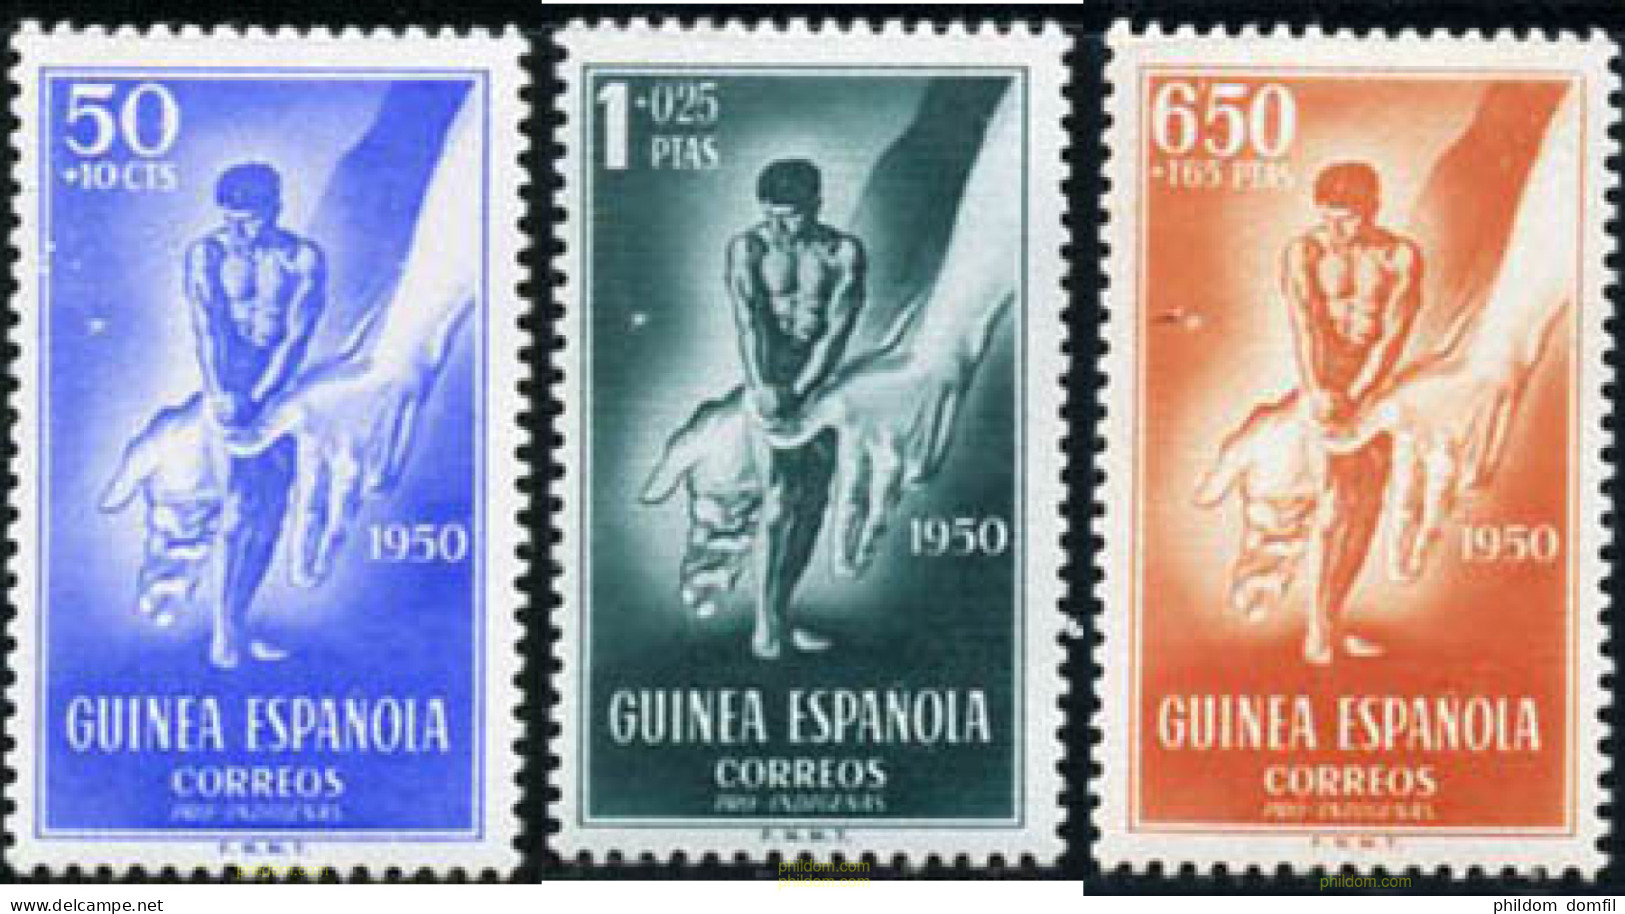 198490 MNH GUINEA ESPAÑOLA 1950 PRO INDIGENAS - Guinea Spagnola